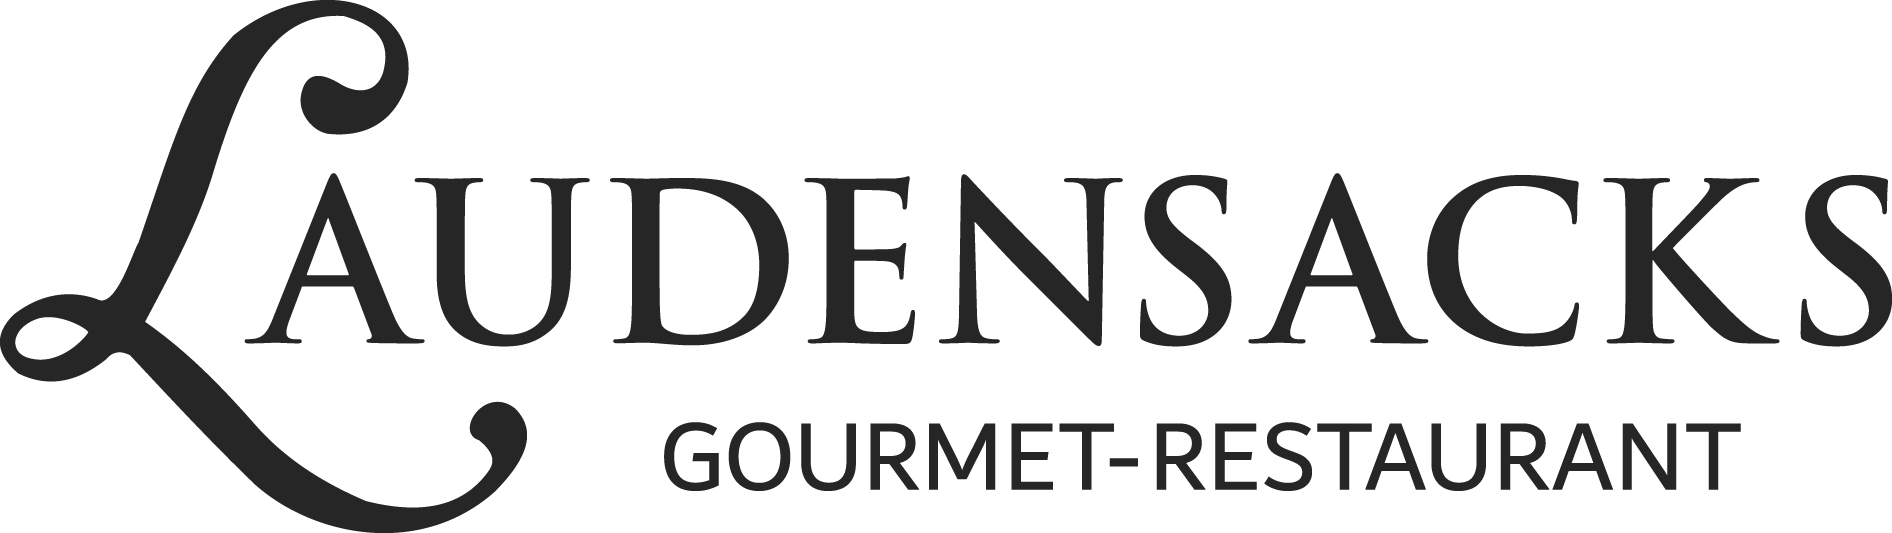 Laudensacks Gourmet-Restaurant